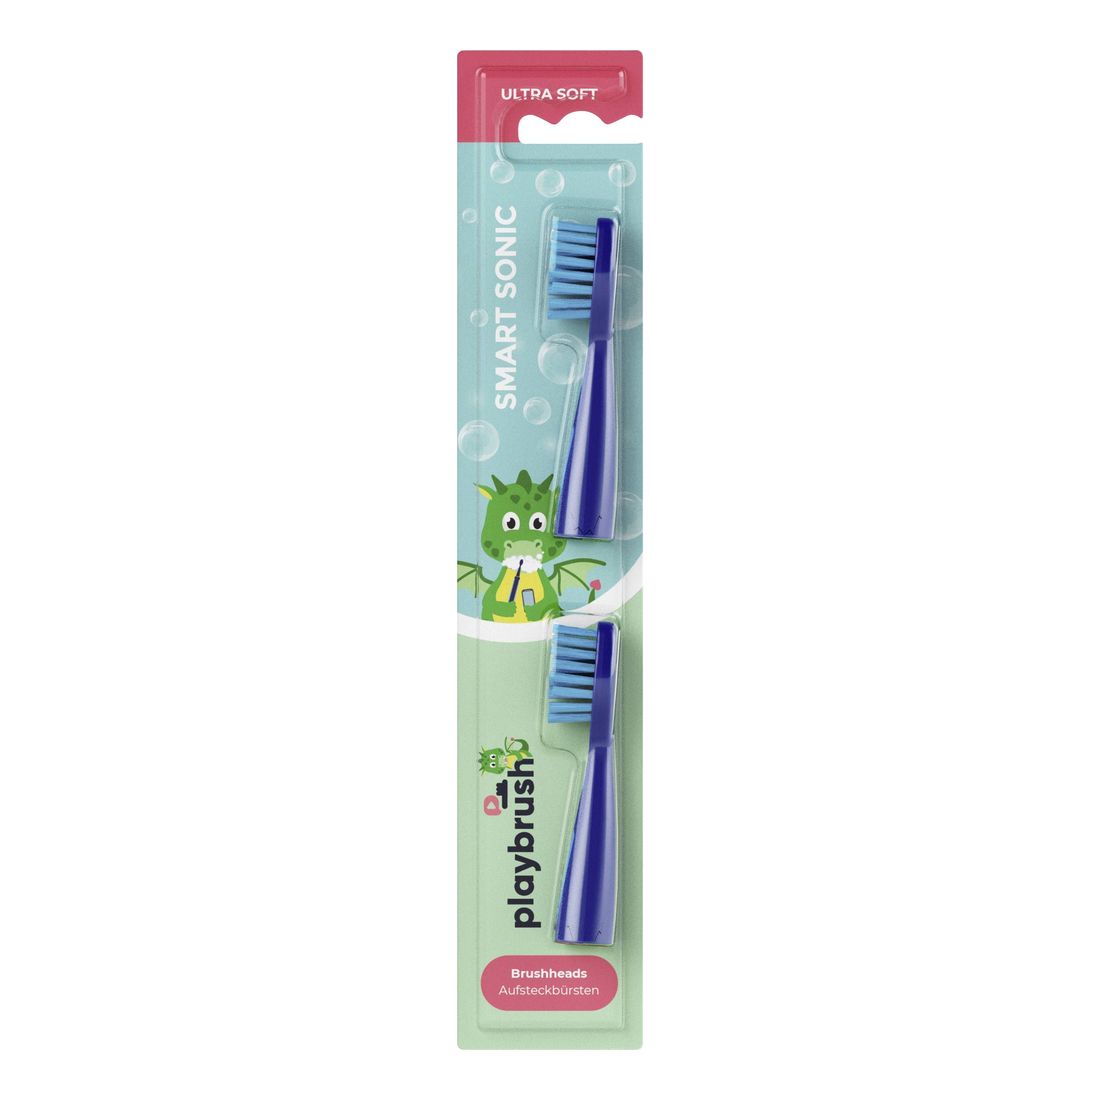 Playbrush Brush Heads for Smart Sonic Toothbrush - Blue